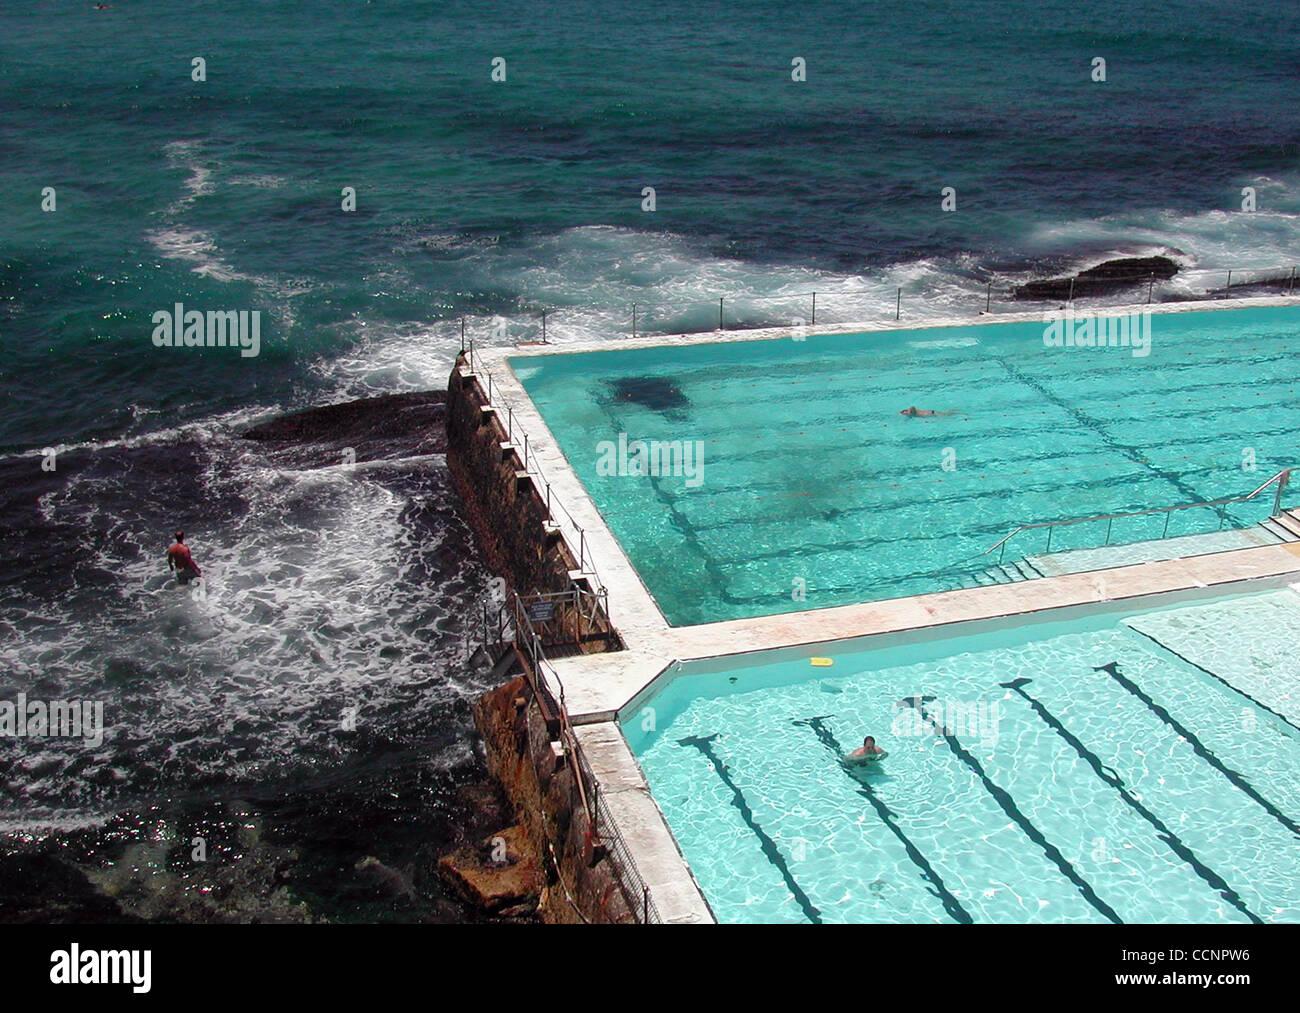 Nov 26, 2004; Bondi Beach, New South Wales, AUSTRALIA; Australia's famous Bondi Beach. The Bondi swimming pool overlooks the water. Stock Photo